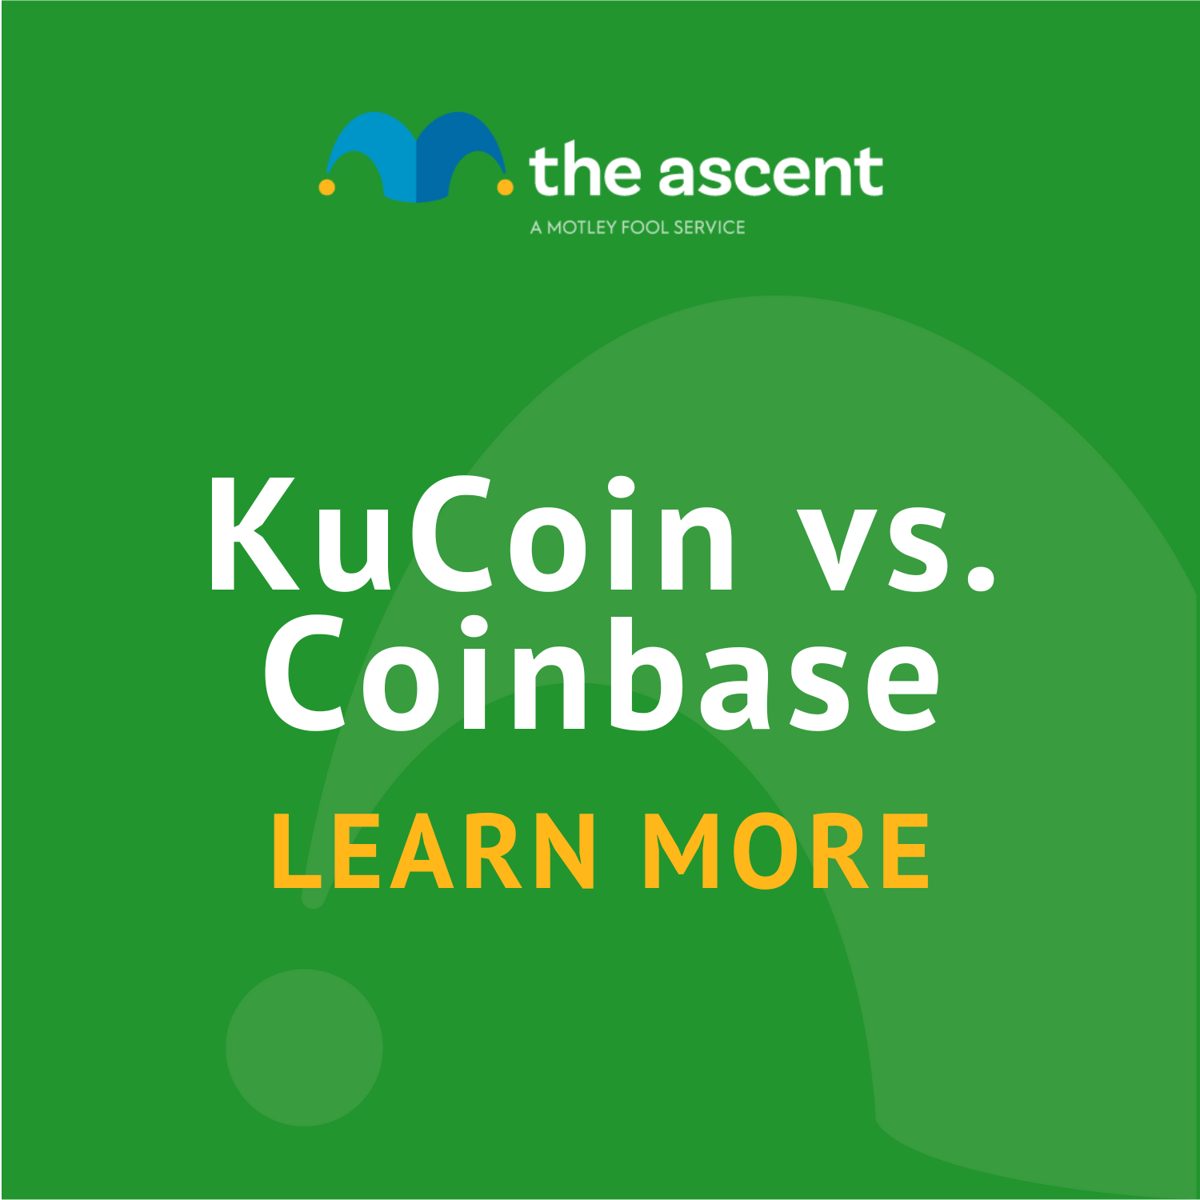 Is KuCoin the same as Coinbase?